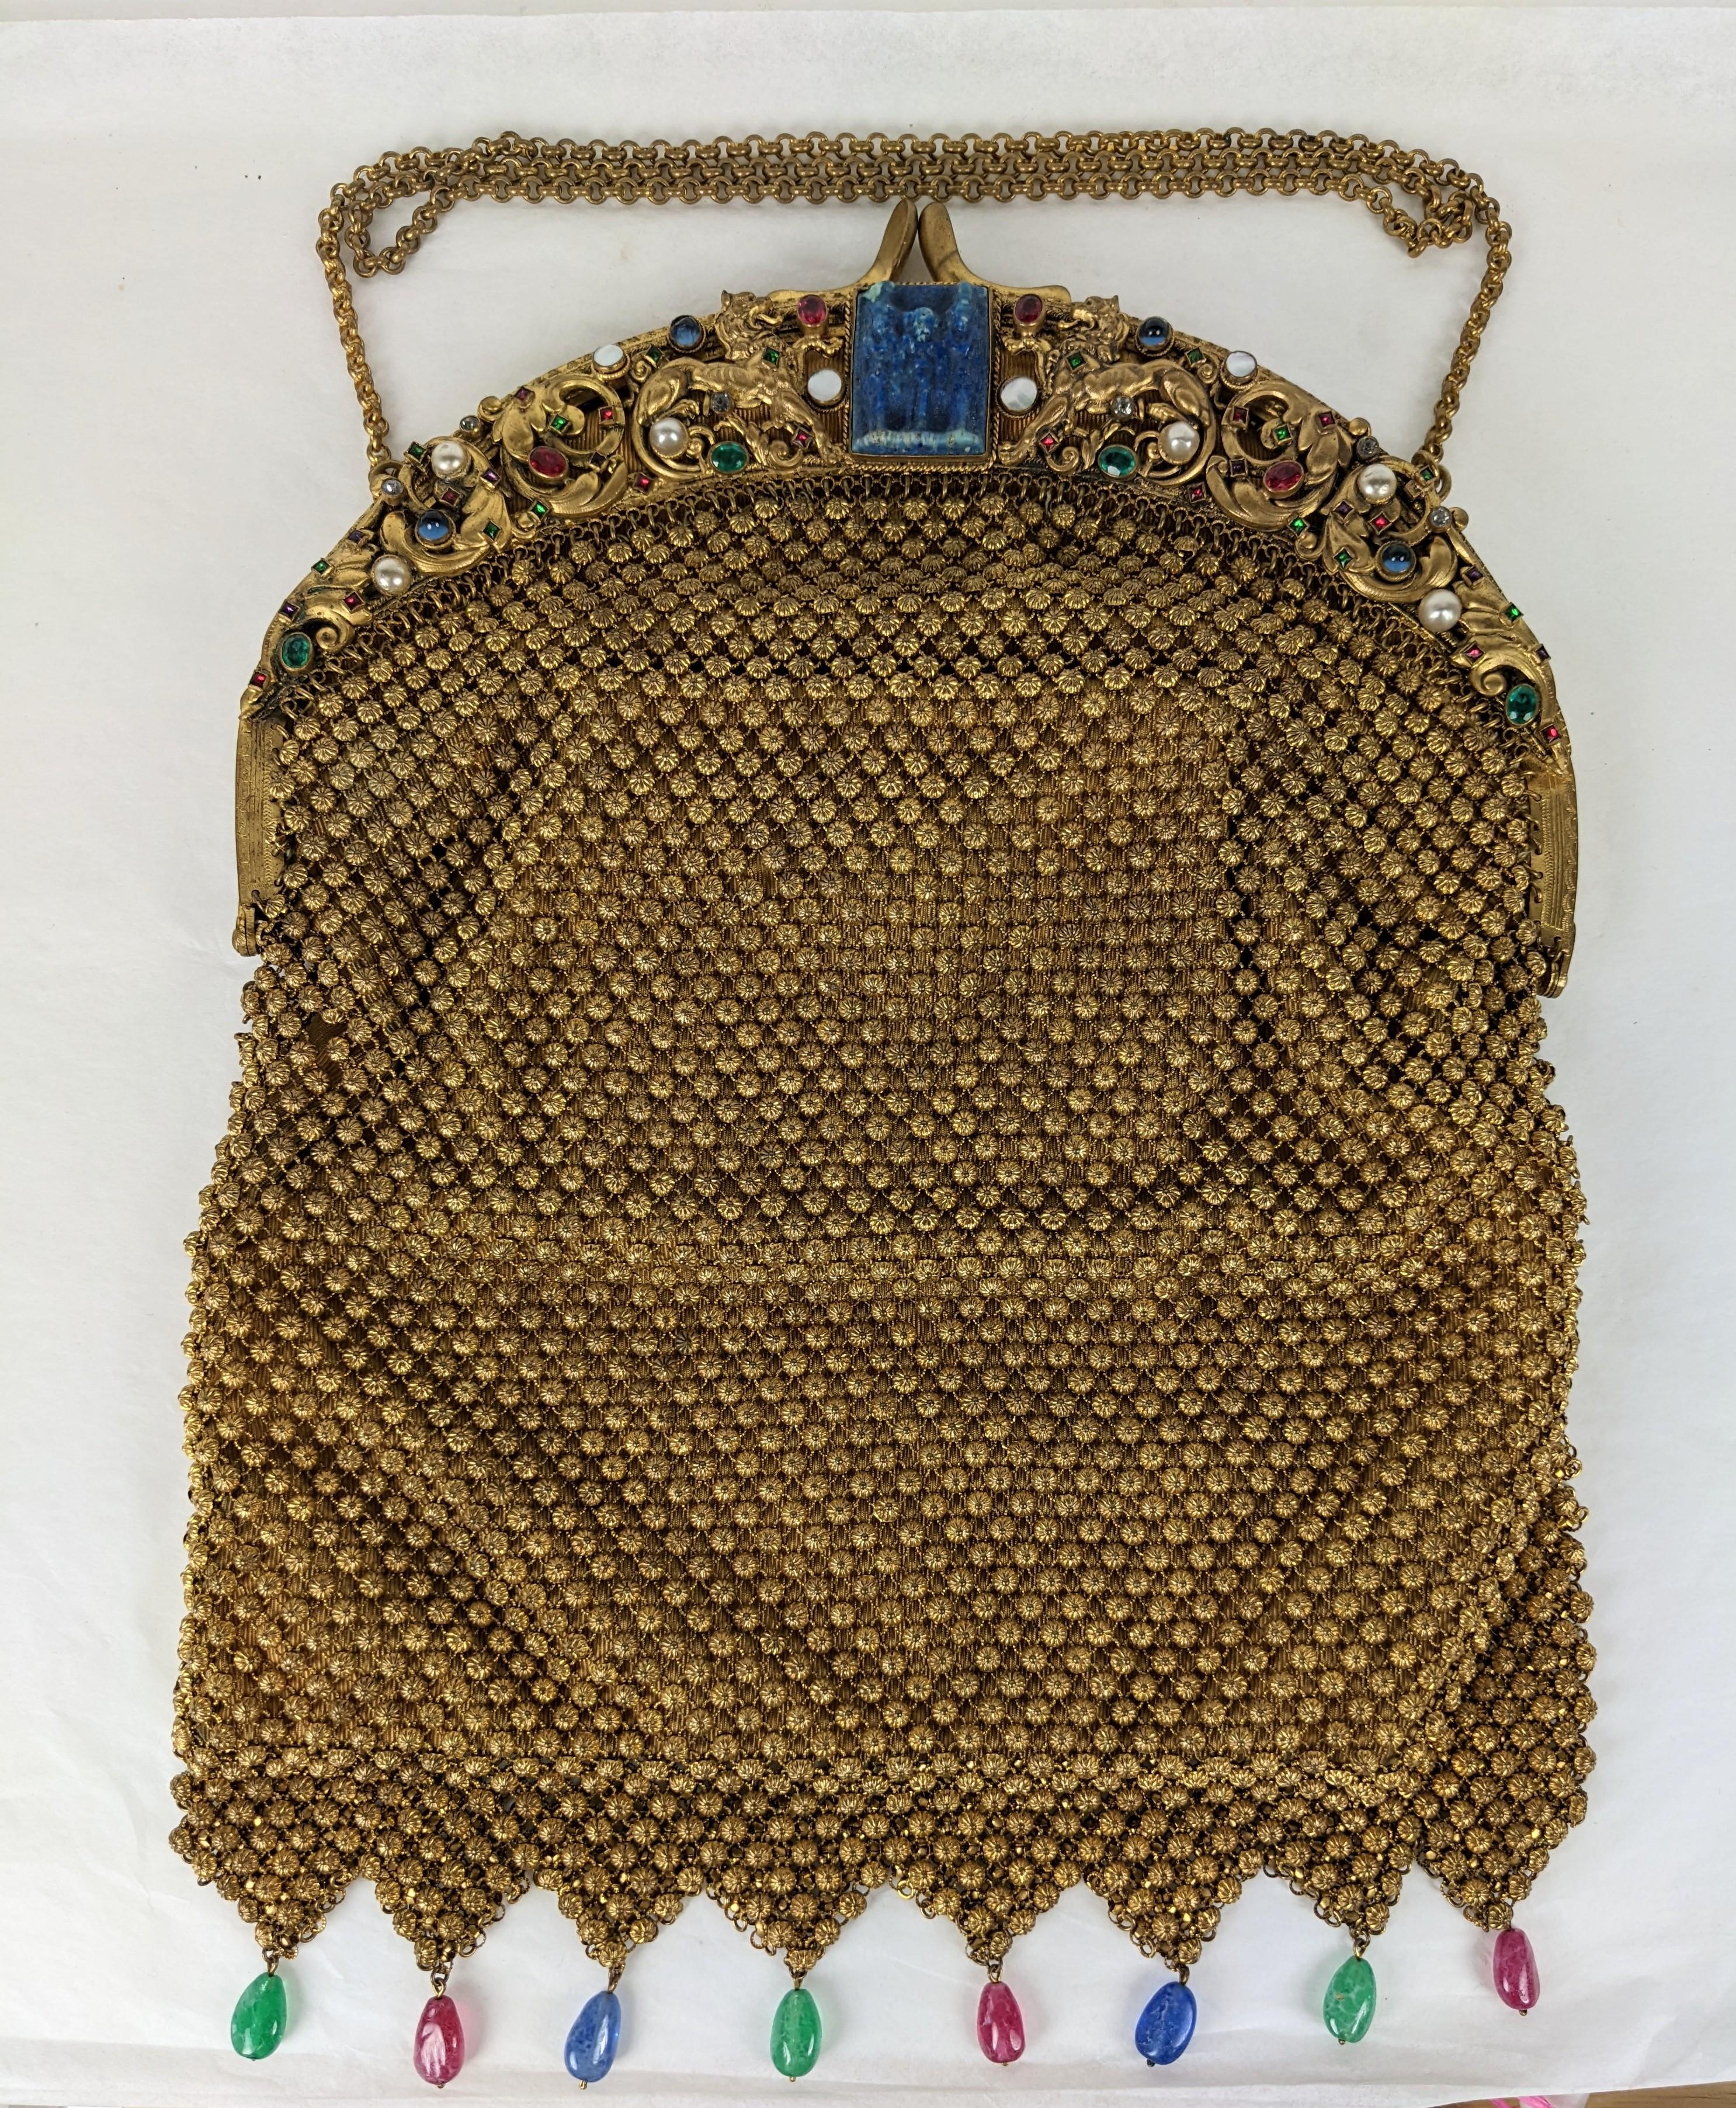 1920s mesh purse